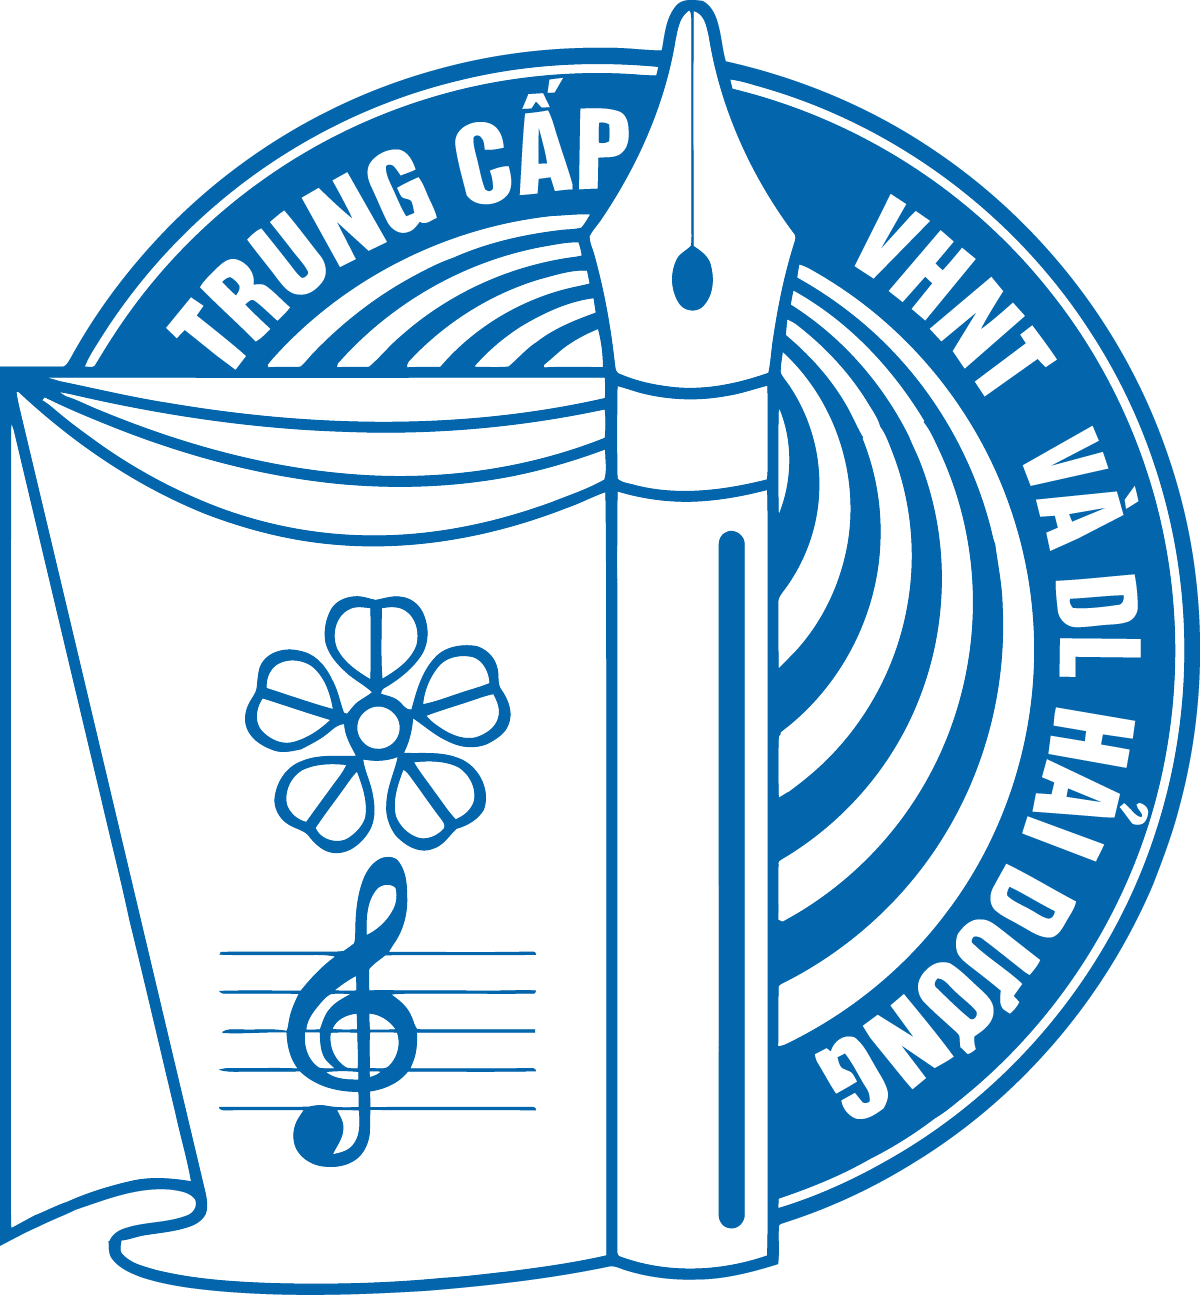 Logo Truong Trung cap Van hoa Nghe thuat va Du lich